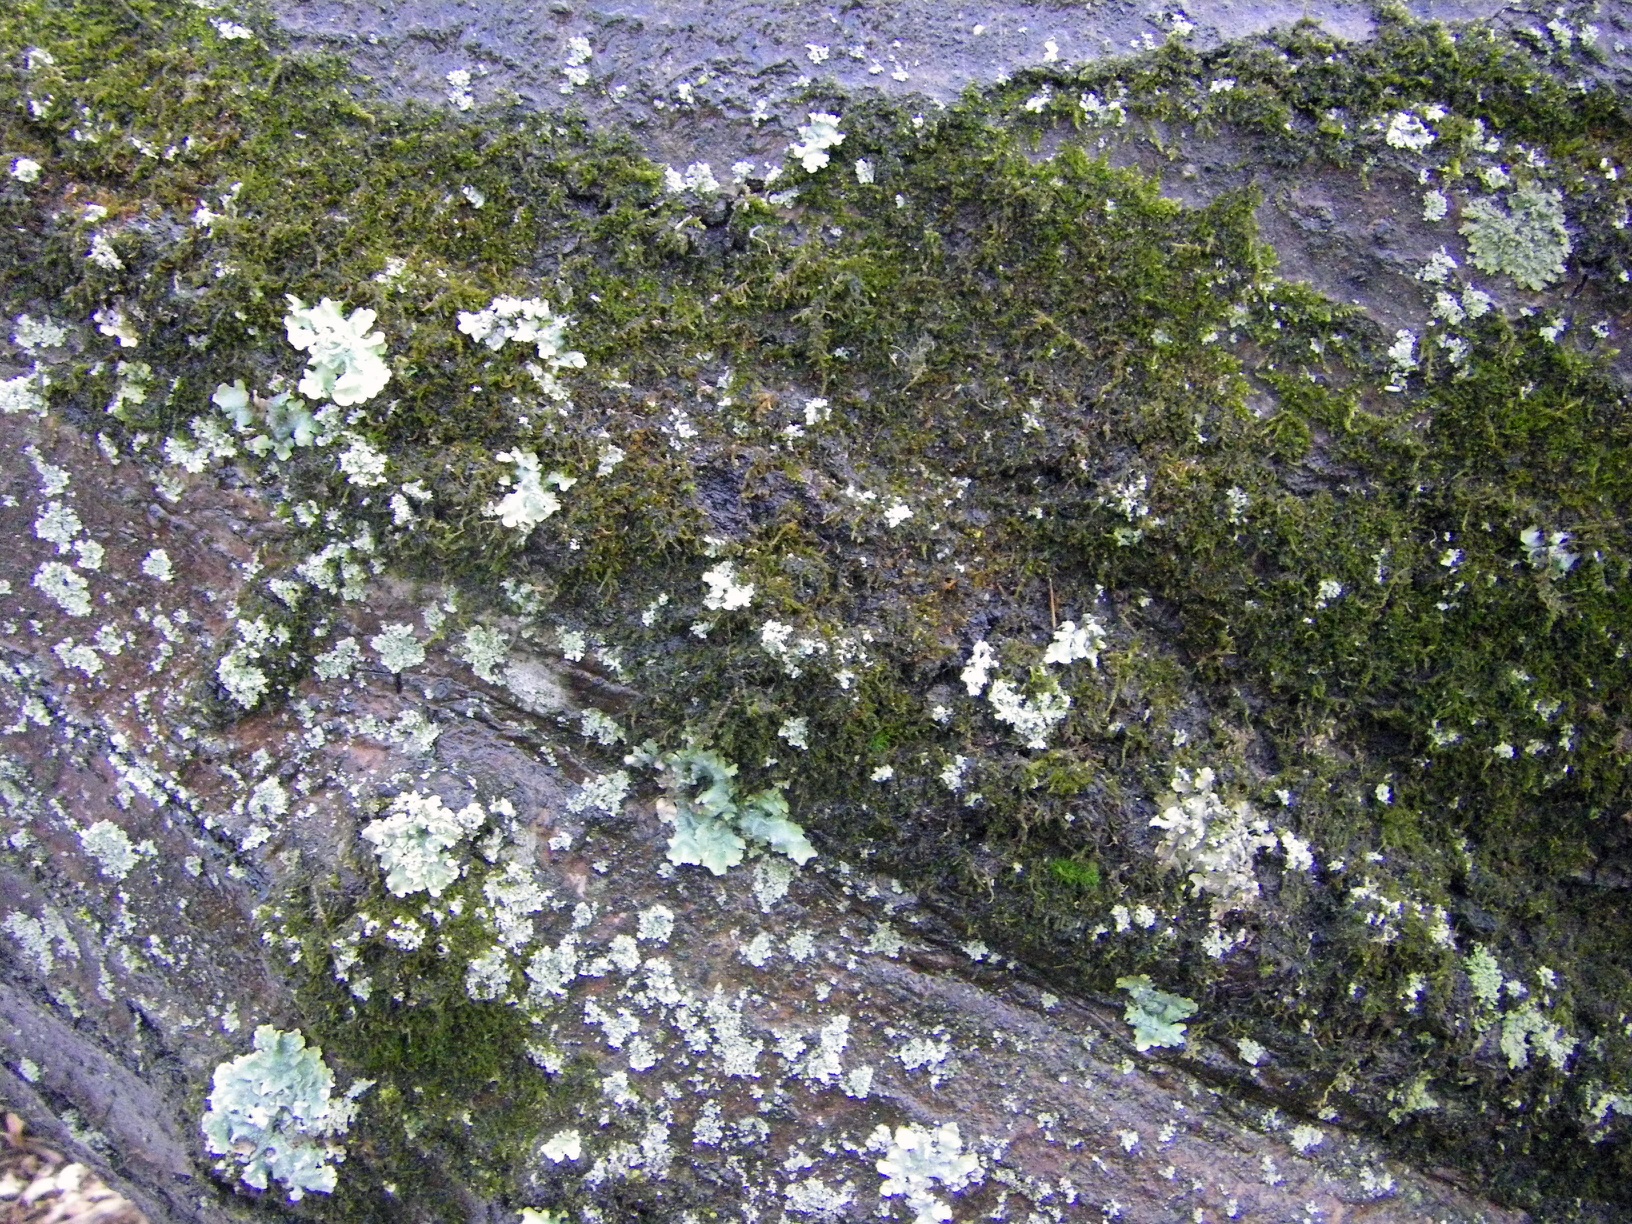 Mossy, and lichen it.